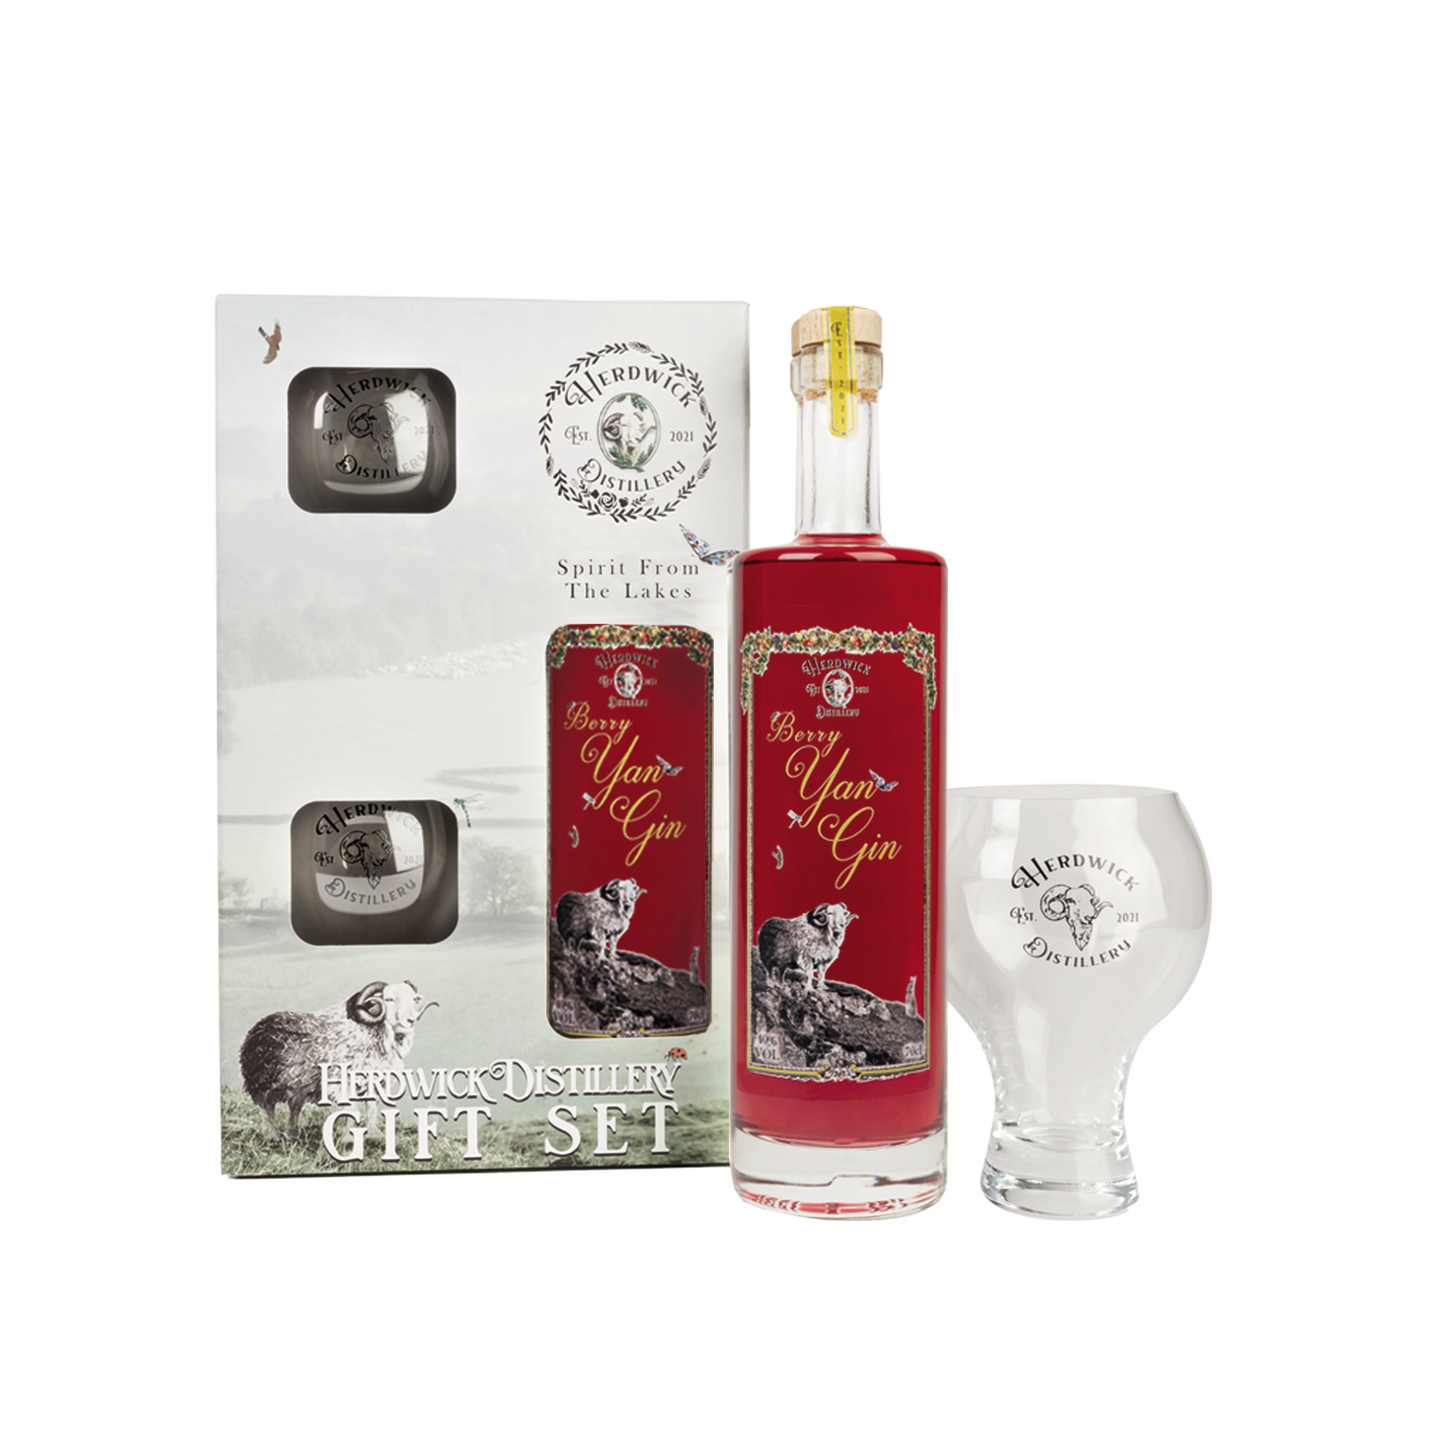 Yan Gin and Glass Gift Set